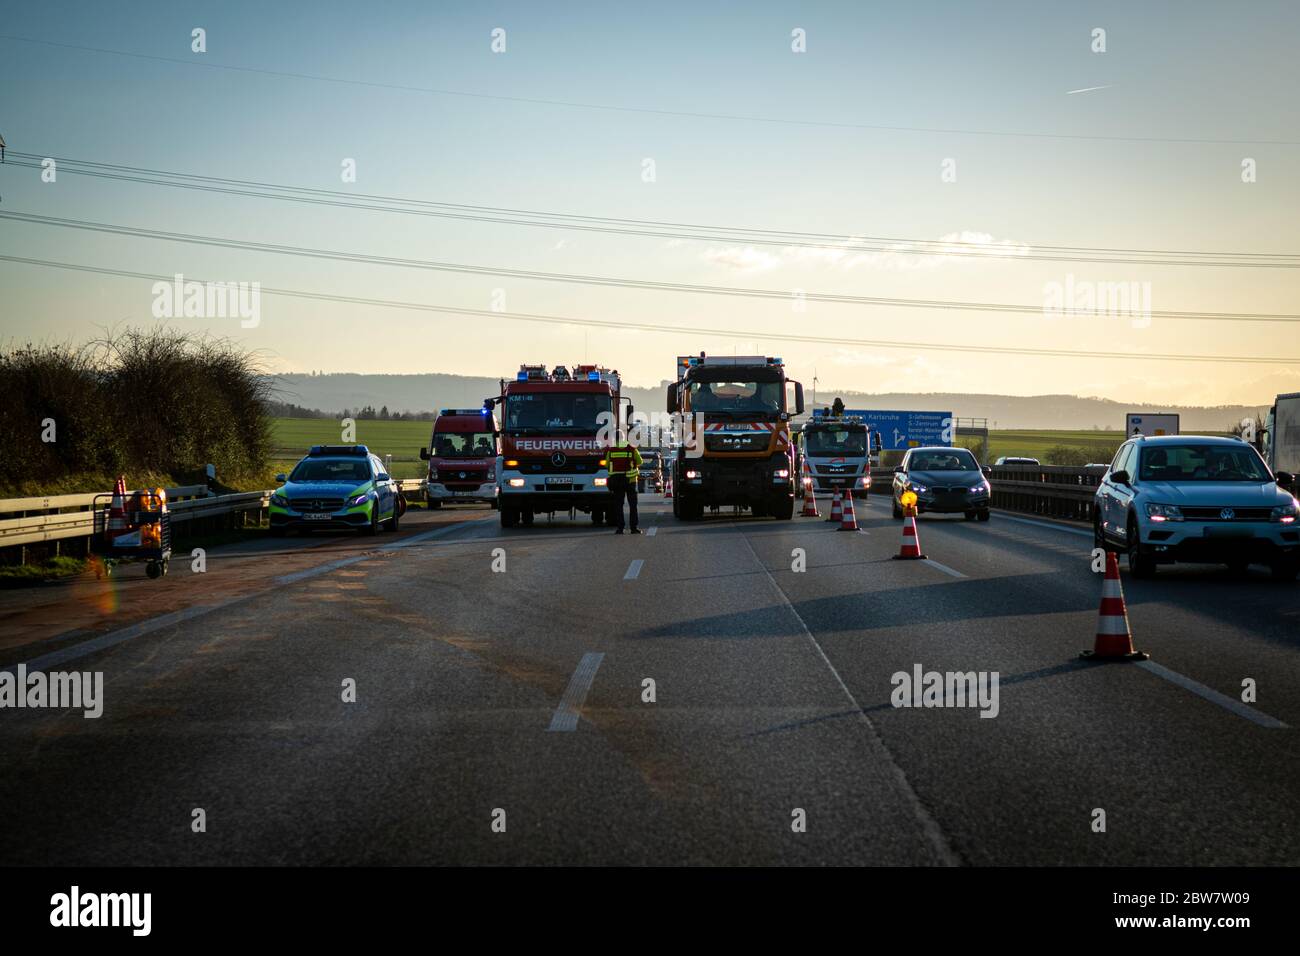 Baustelle / Unfall auf Autobahn A81 - Symbolbild Foto de stock